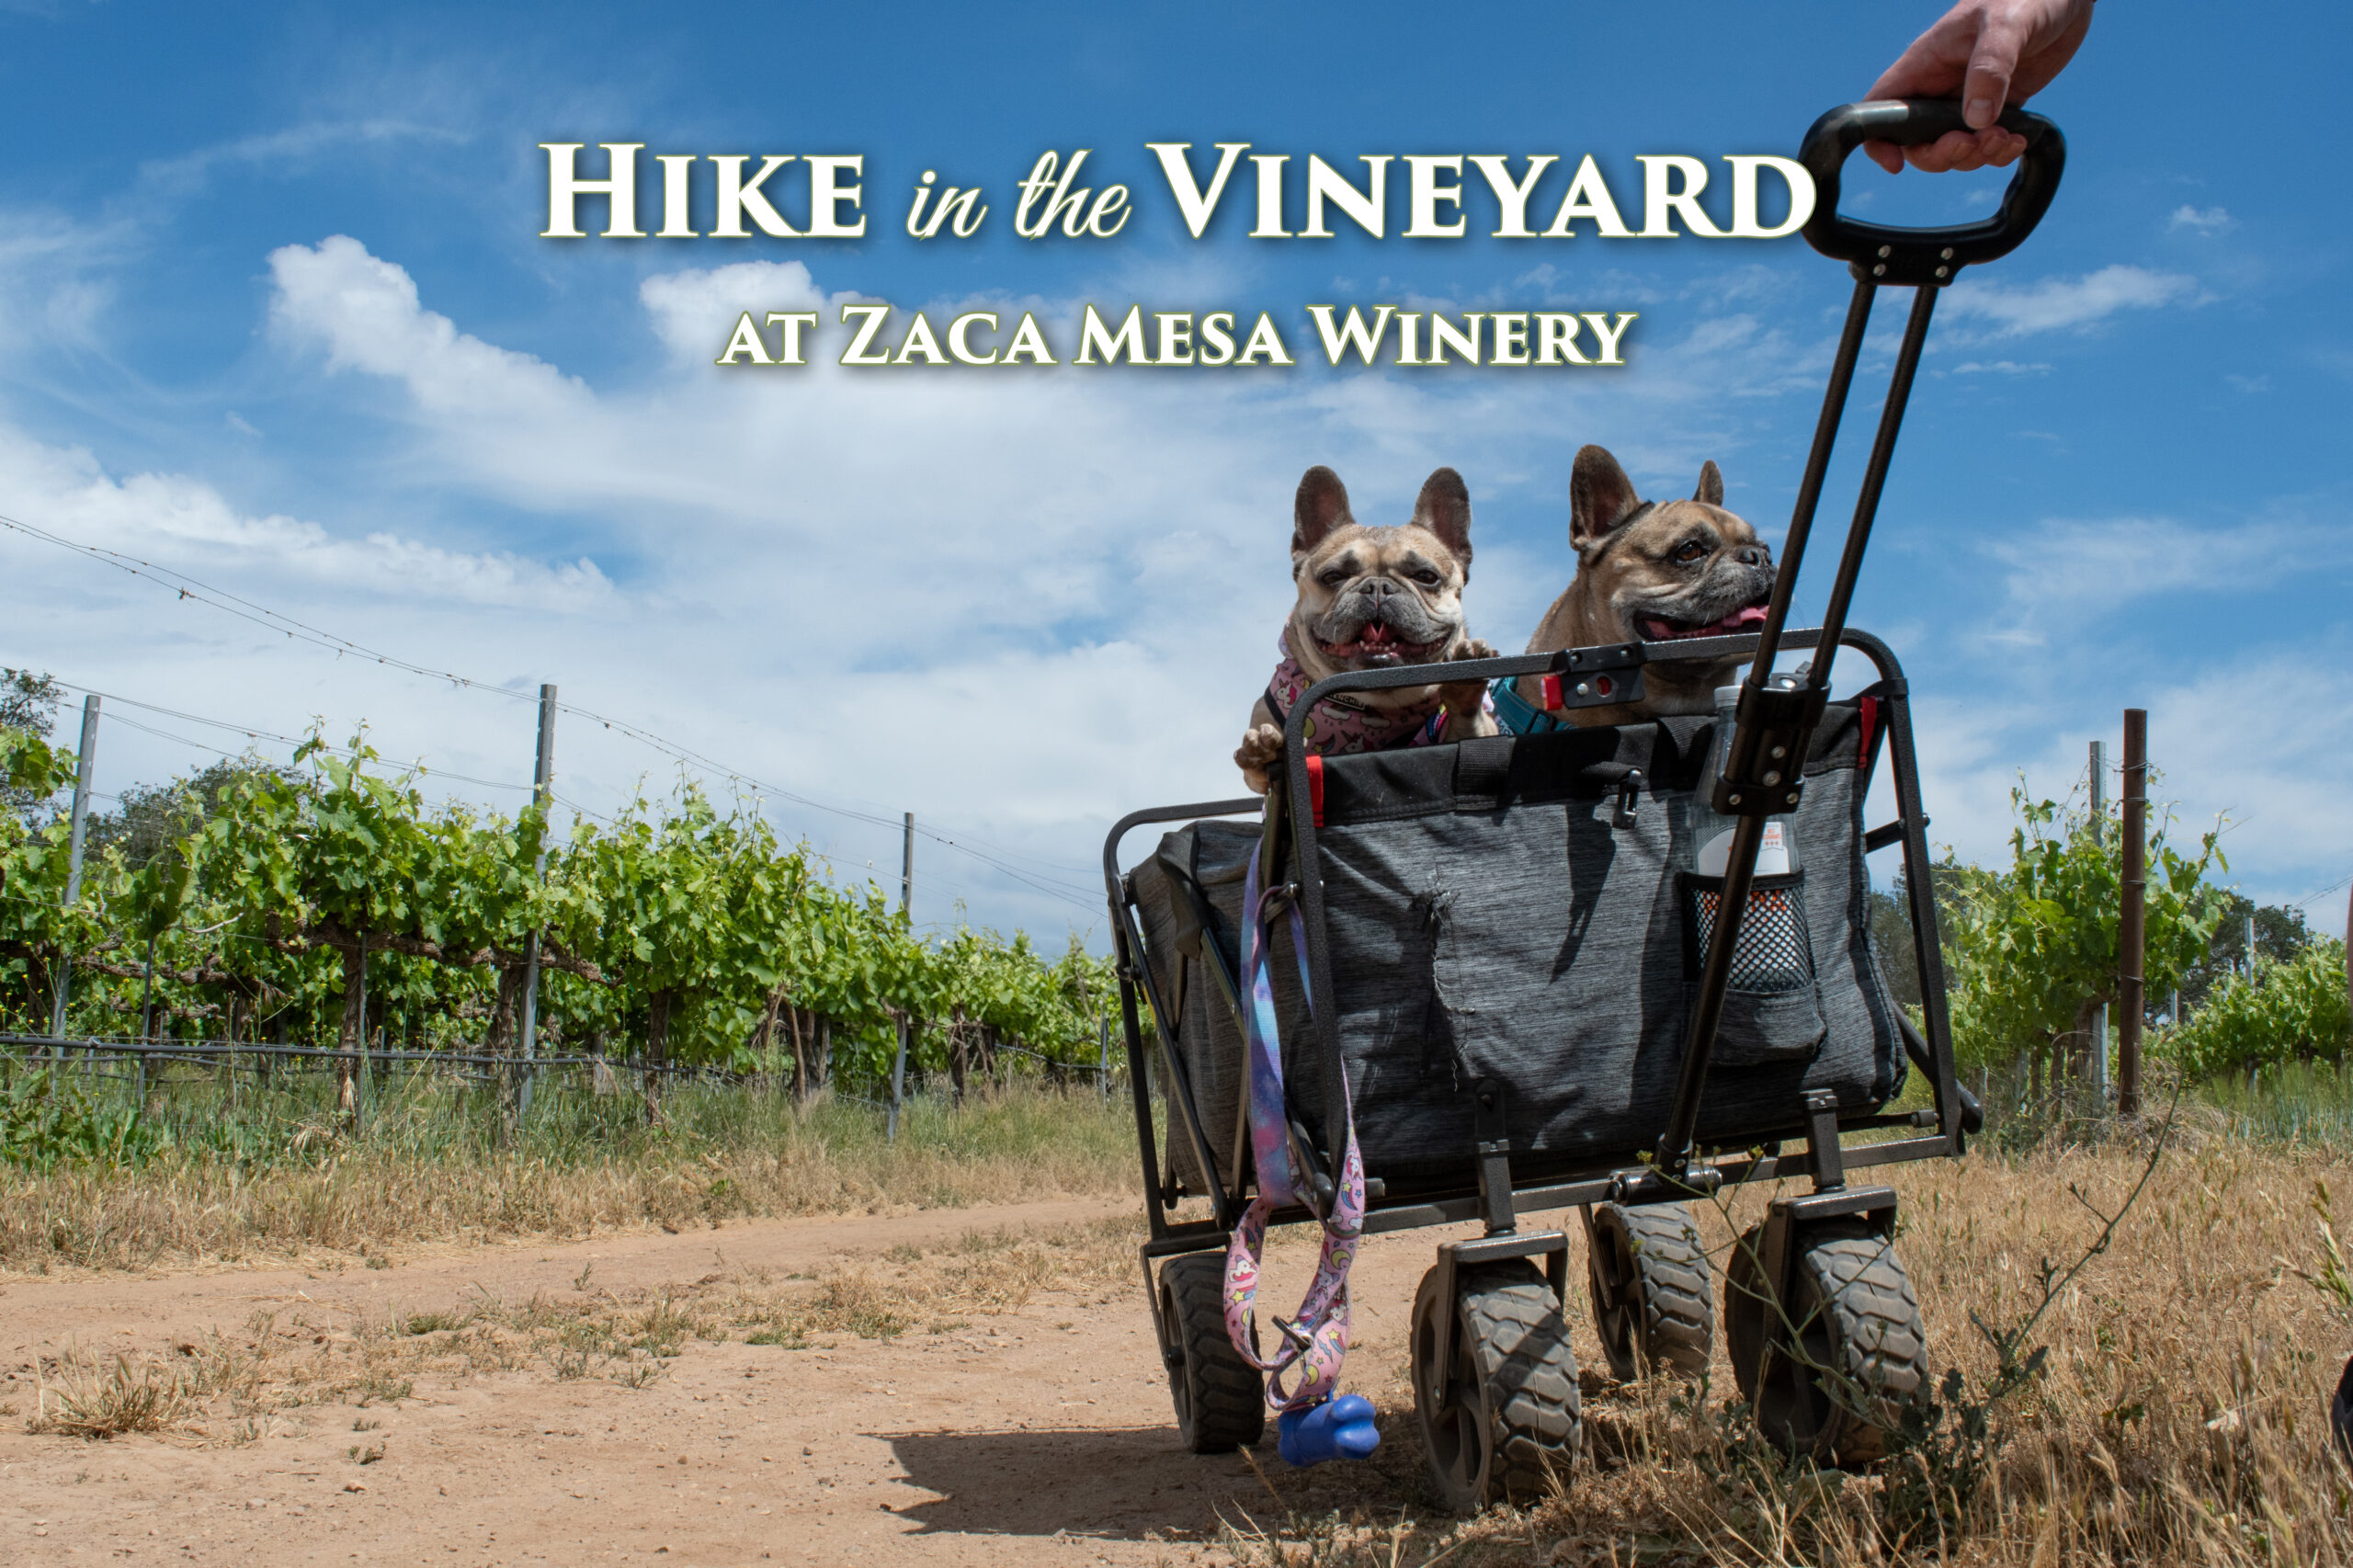 Annual Vineyard Hike with Zaca Mesa Winery